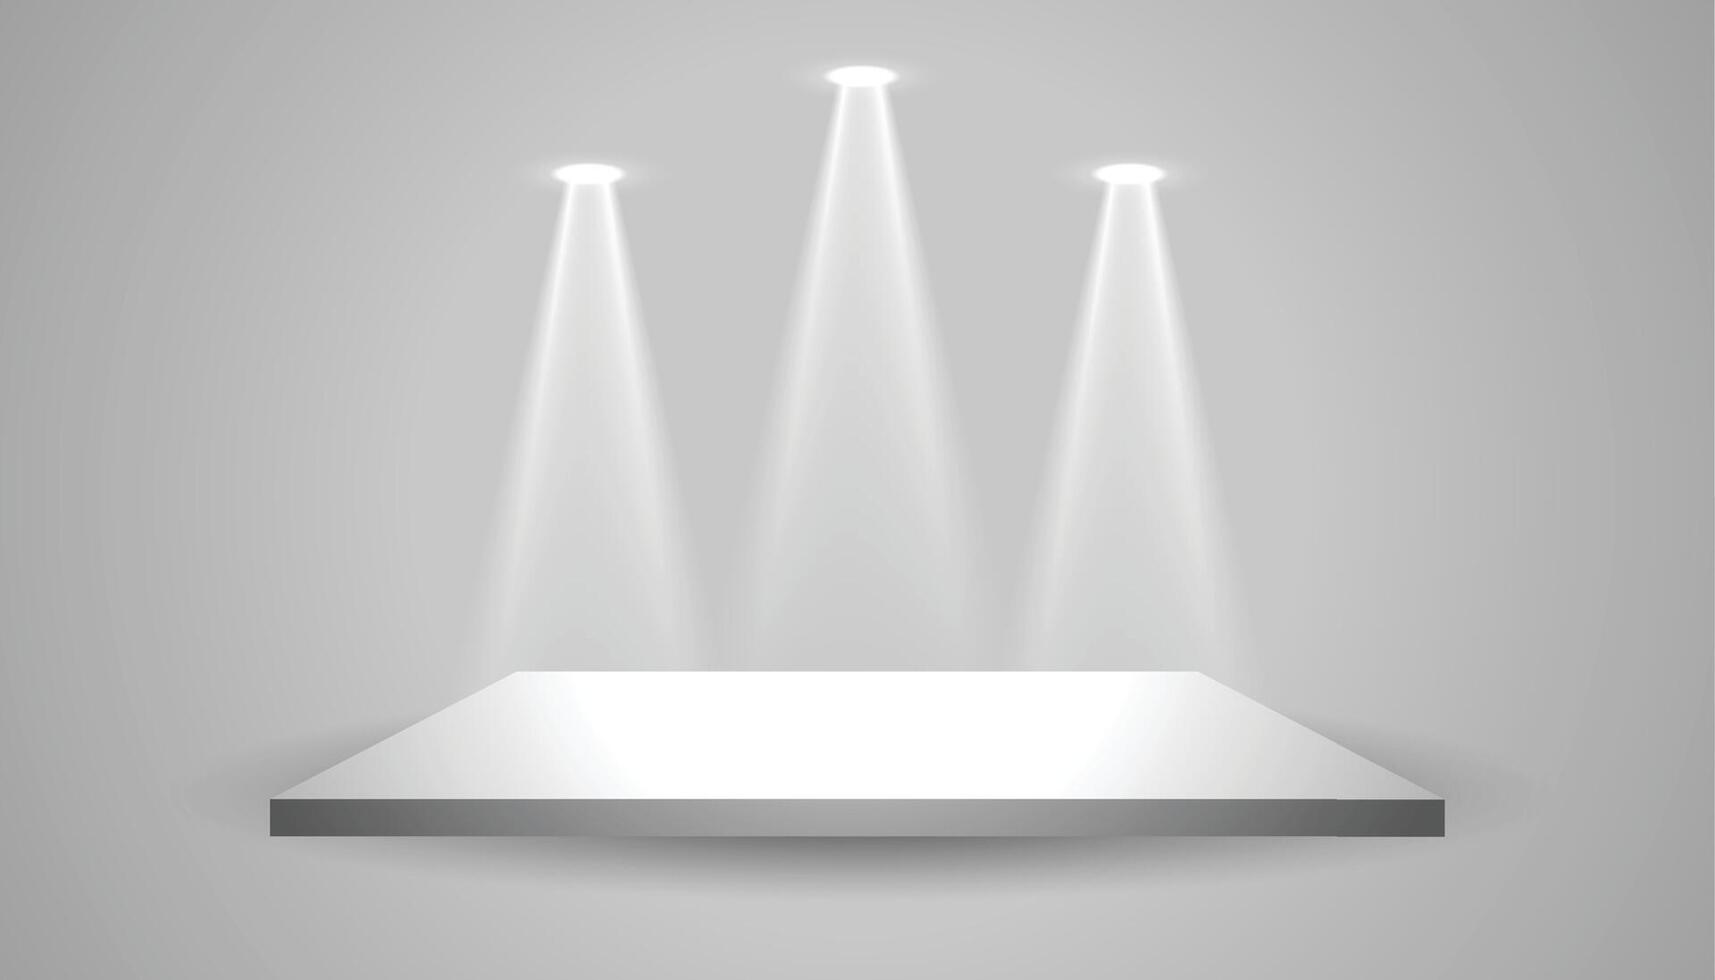 empty 3d podium platform with bright focus light effect vector